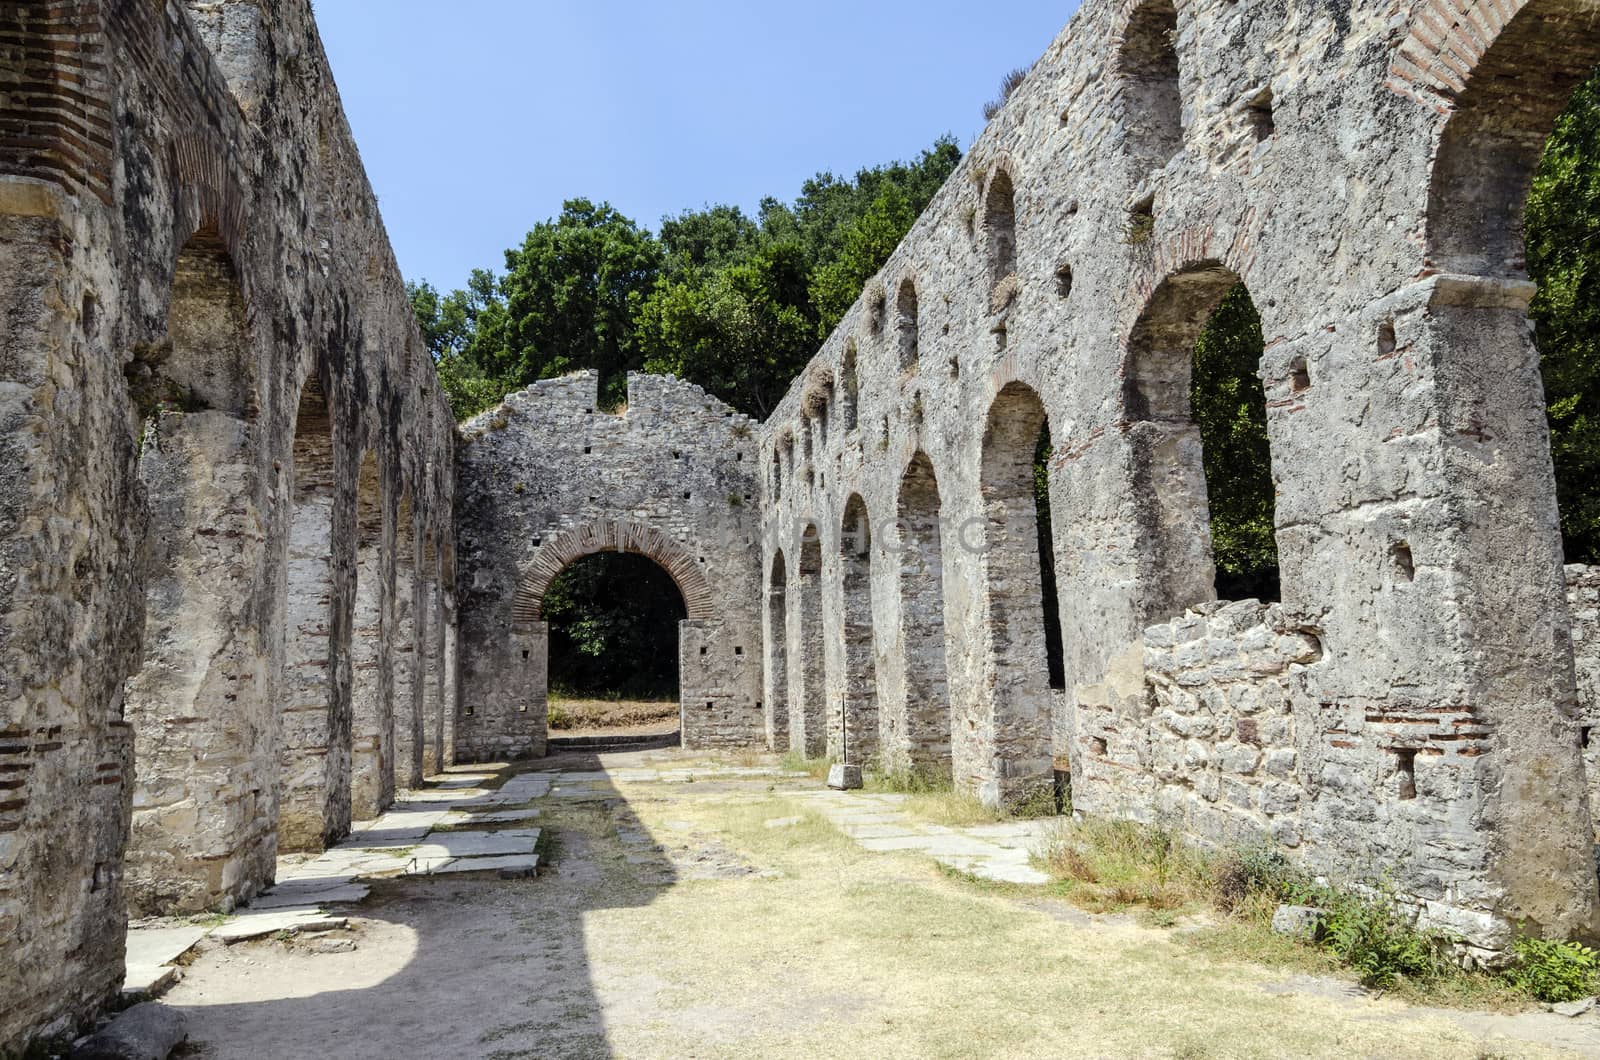 Butrint basilica ruins by Anzemulec